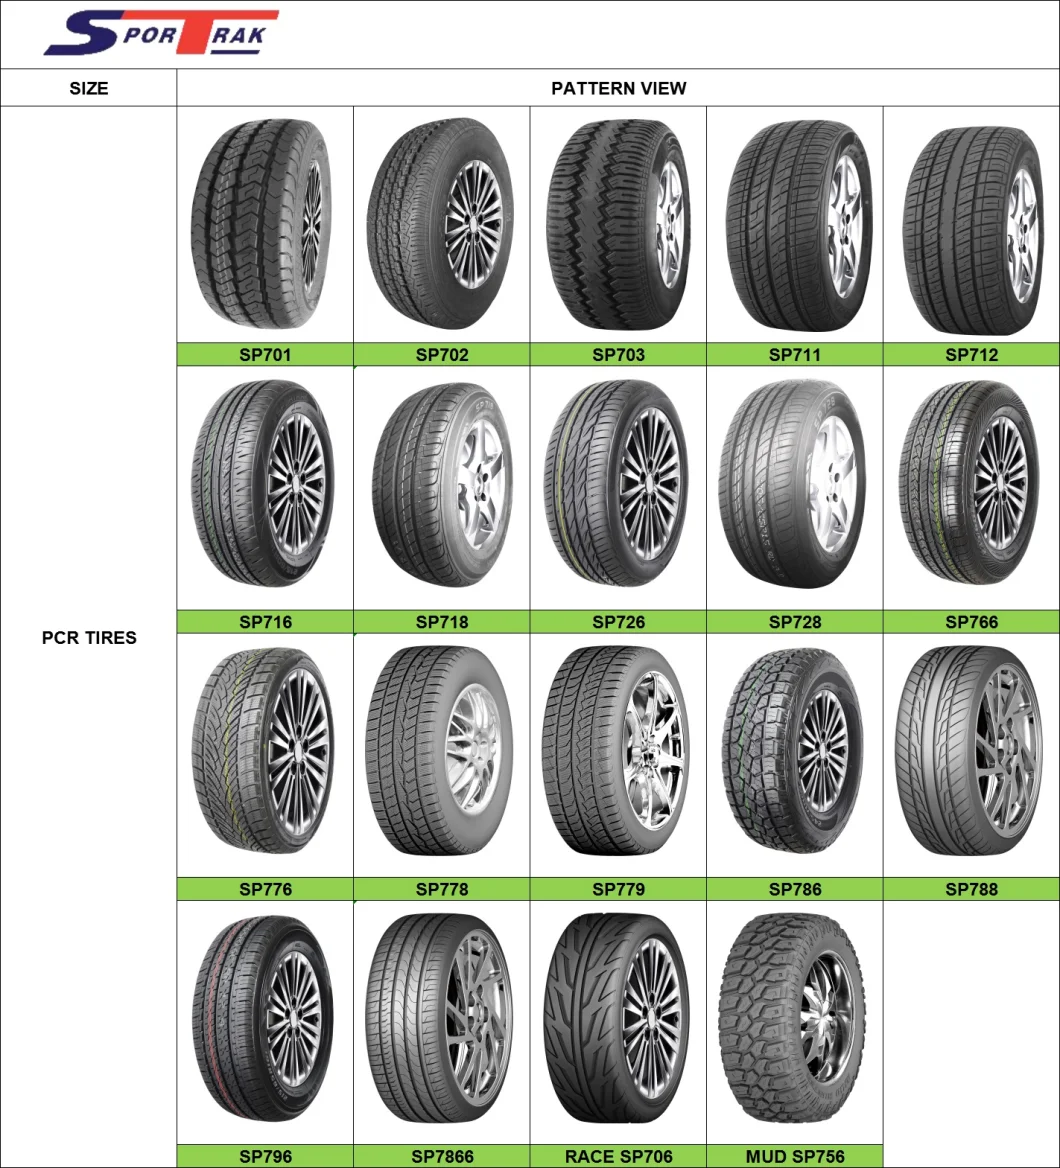 All Terrain Tire, Mud Tire, Sport Tire, off Road Tire